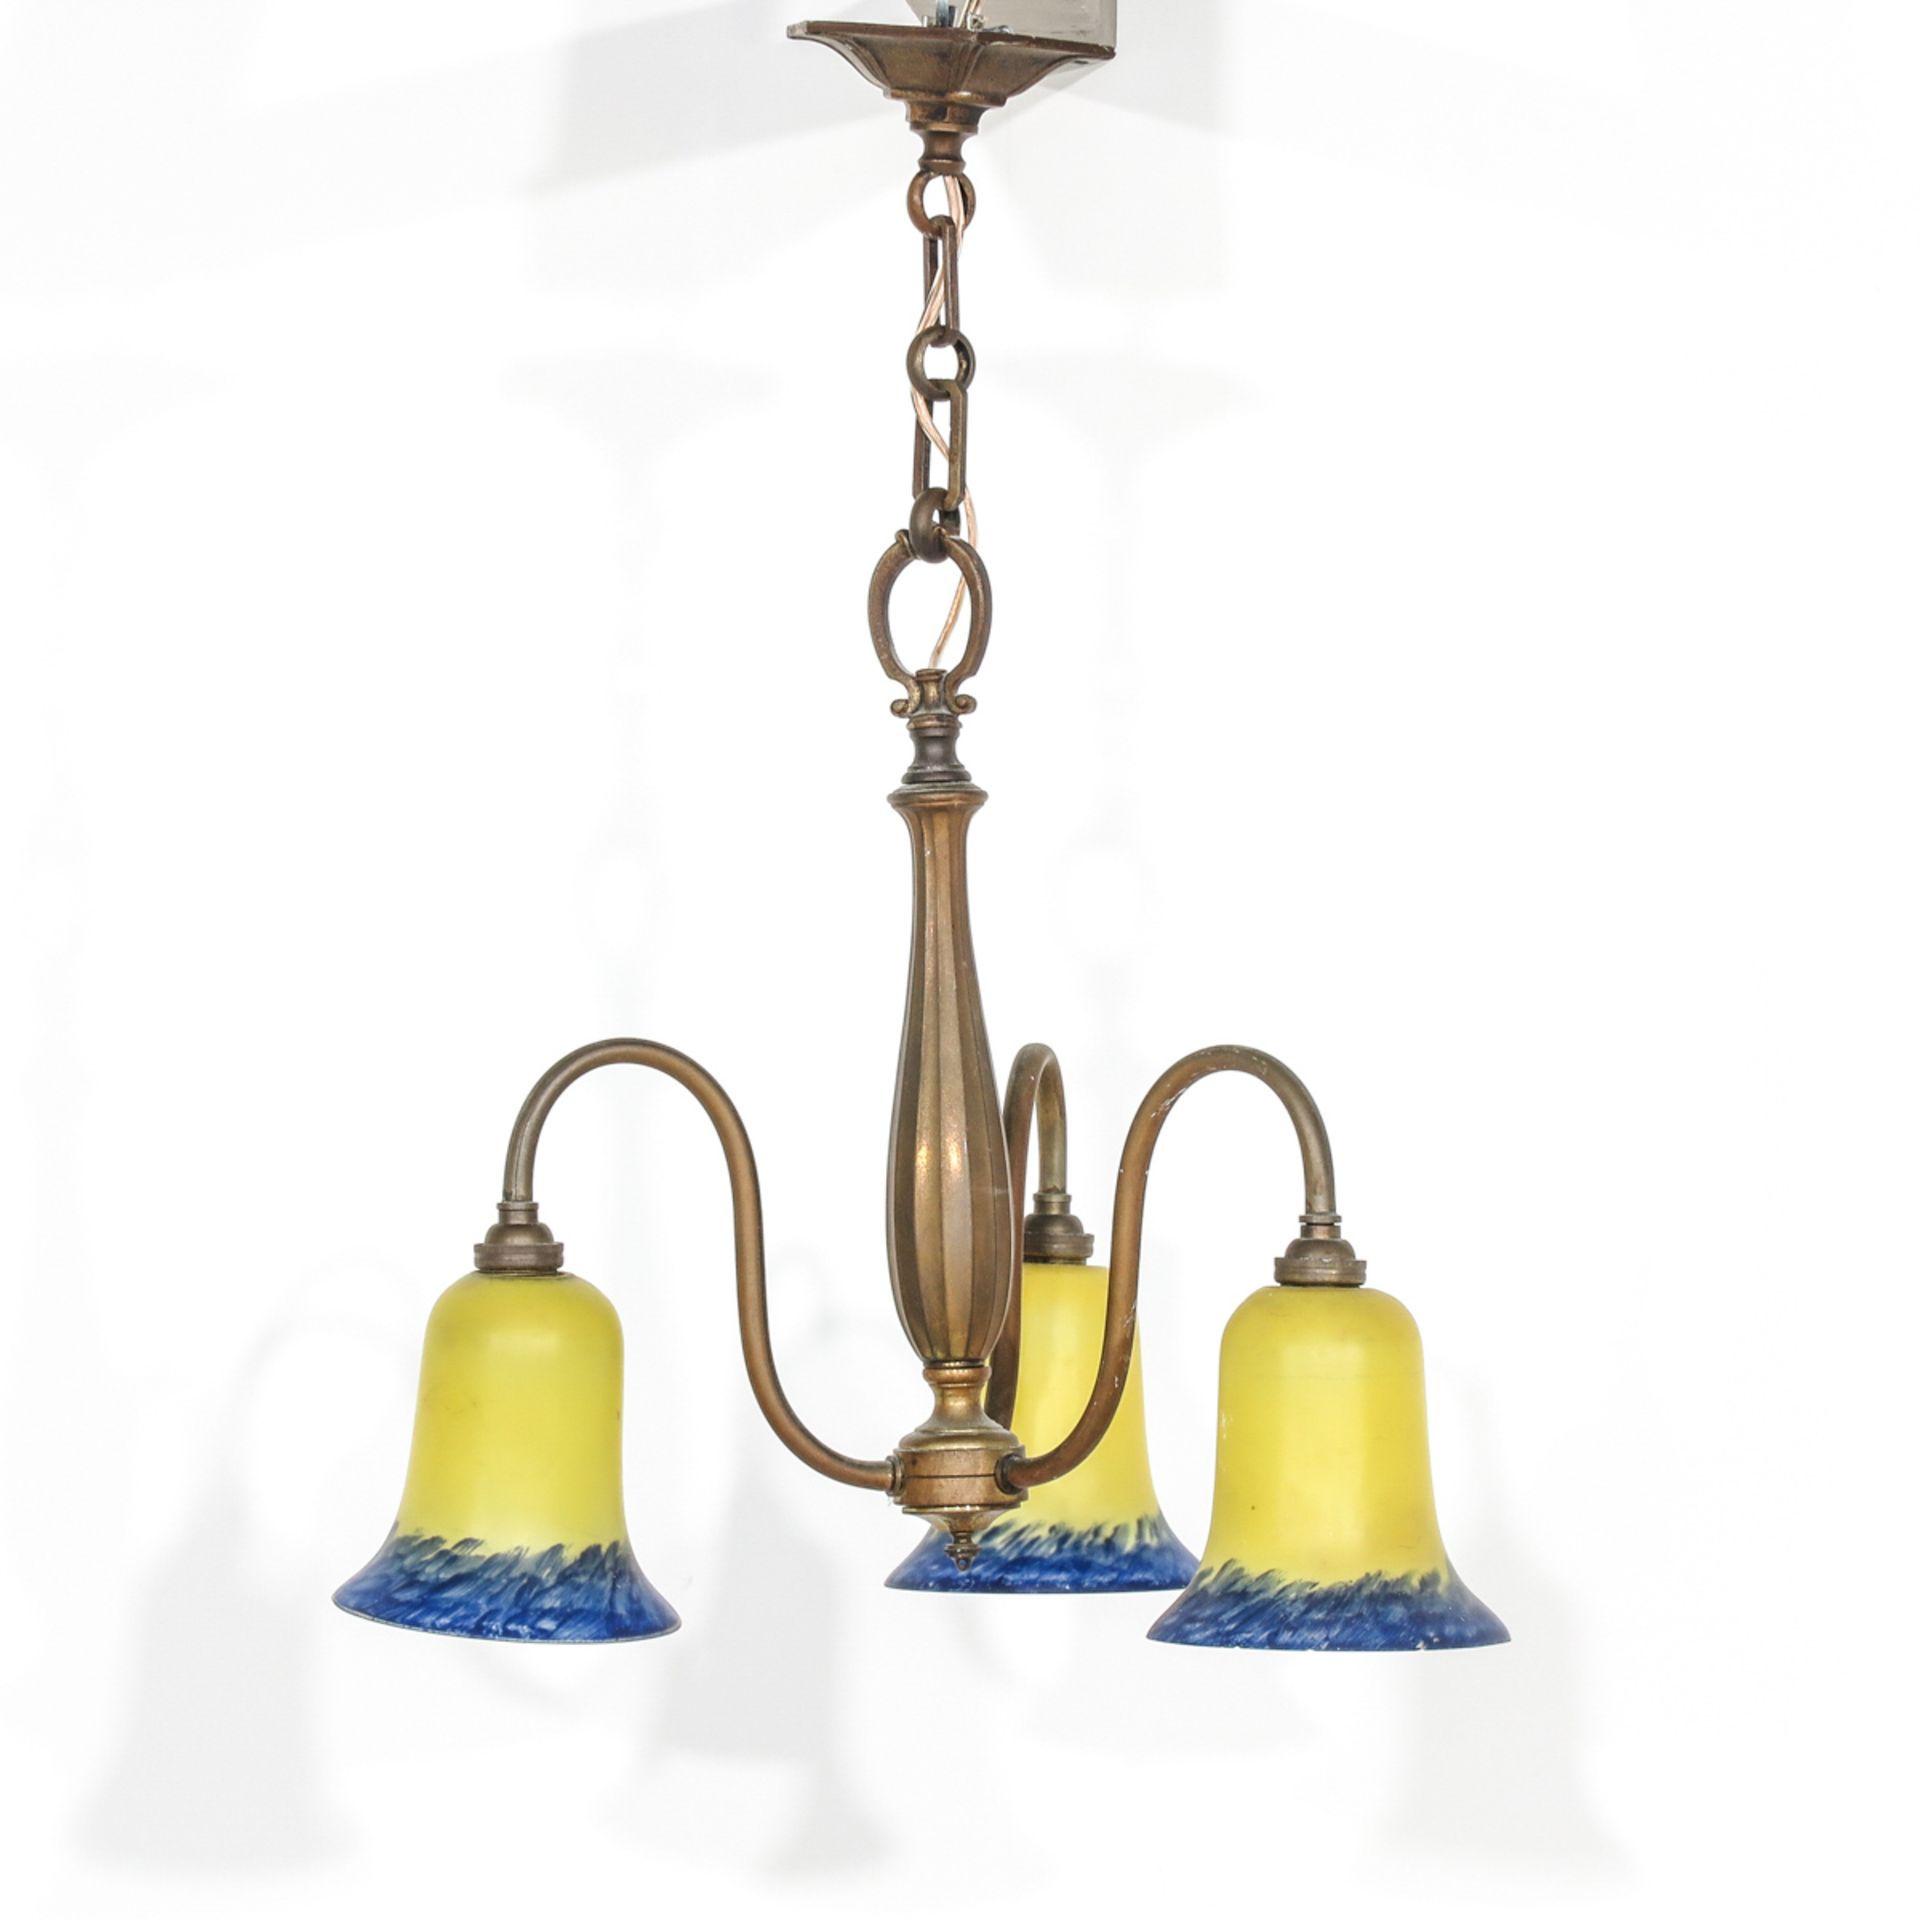 An Art Nouveau Hanging Lamp